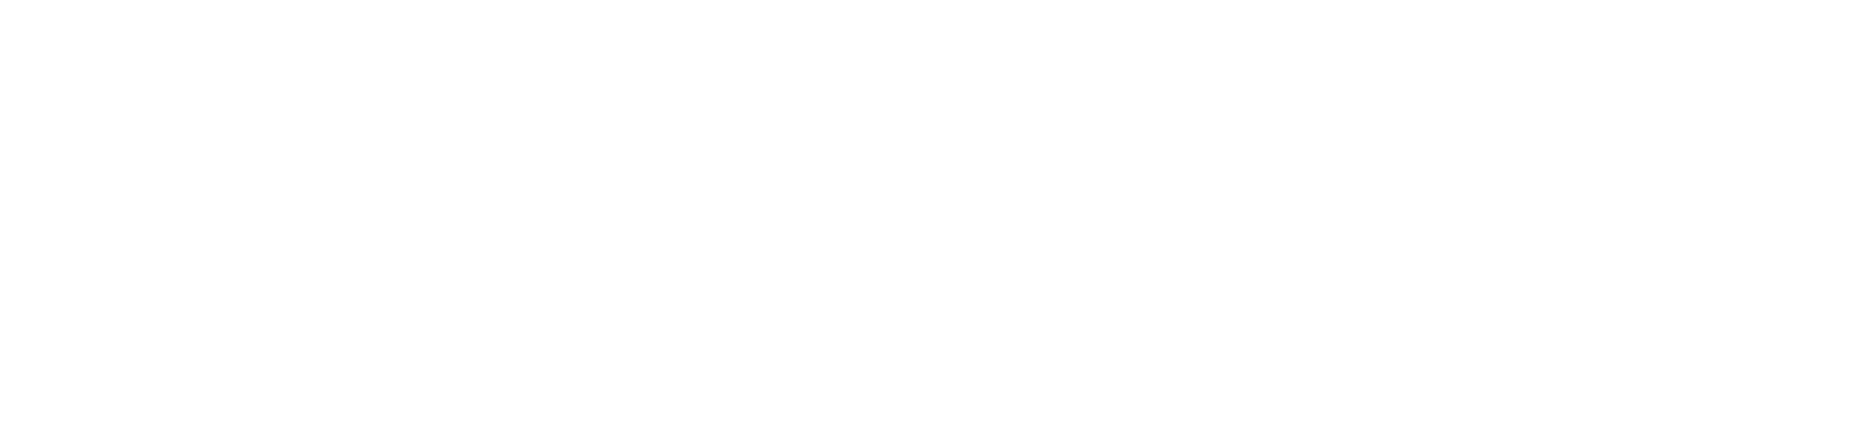 Band logo Wind Rose - white font-colour - transparent background